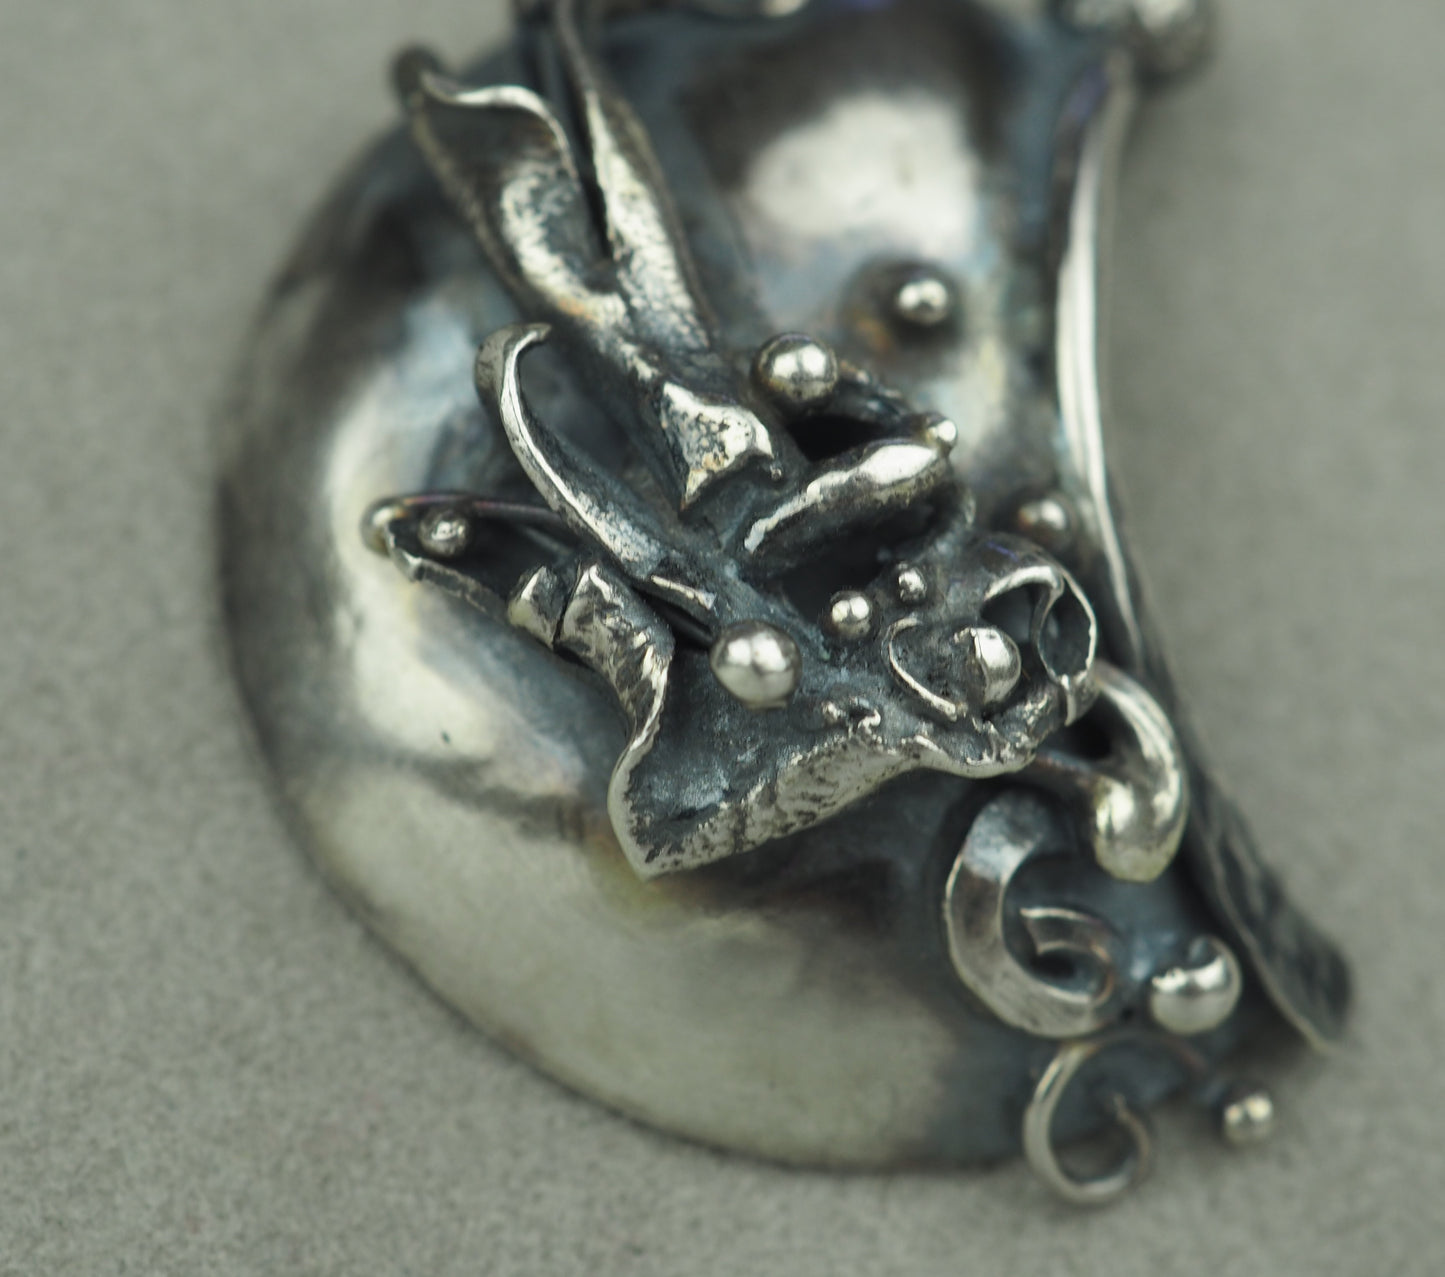 Crickmar, Teresa - Fused Flower Silver Necklace